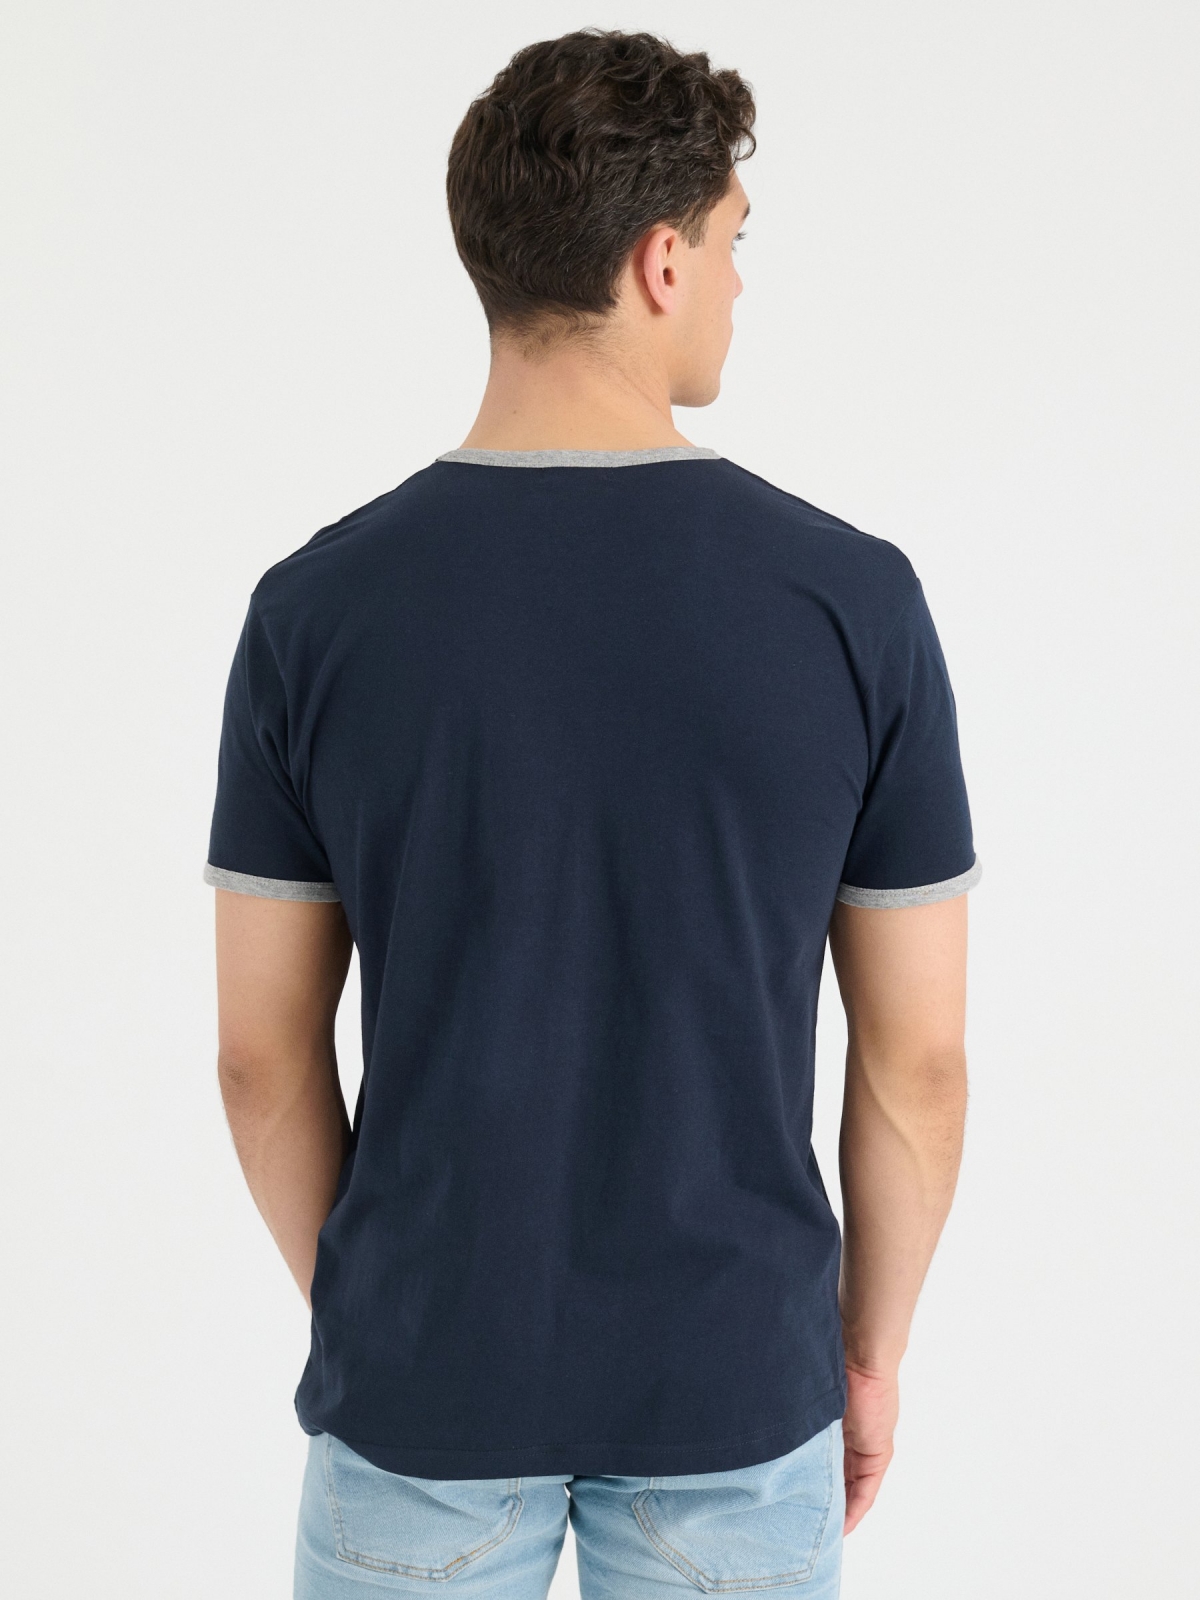 Camiseta básica contrastes azul marino vista media trasera